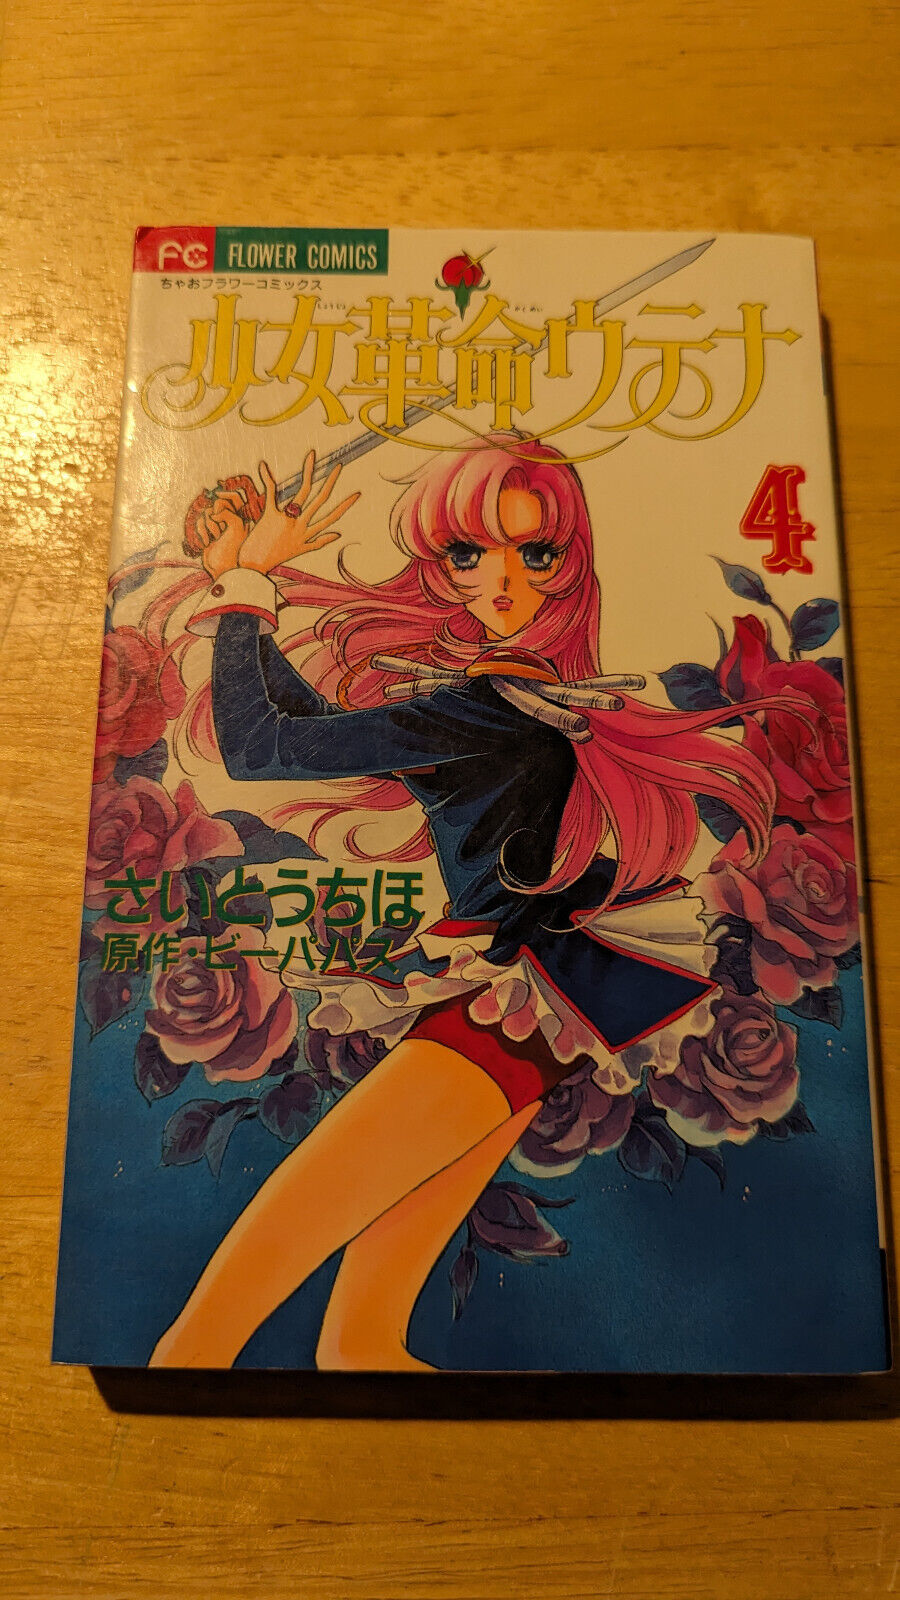 Shoujo Kakumei (Revolutionary Girl) Utena Vol 4 in Japanese